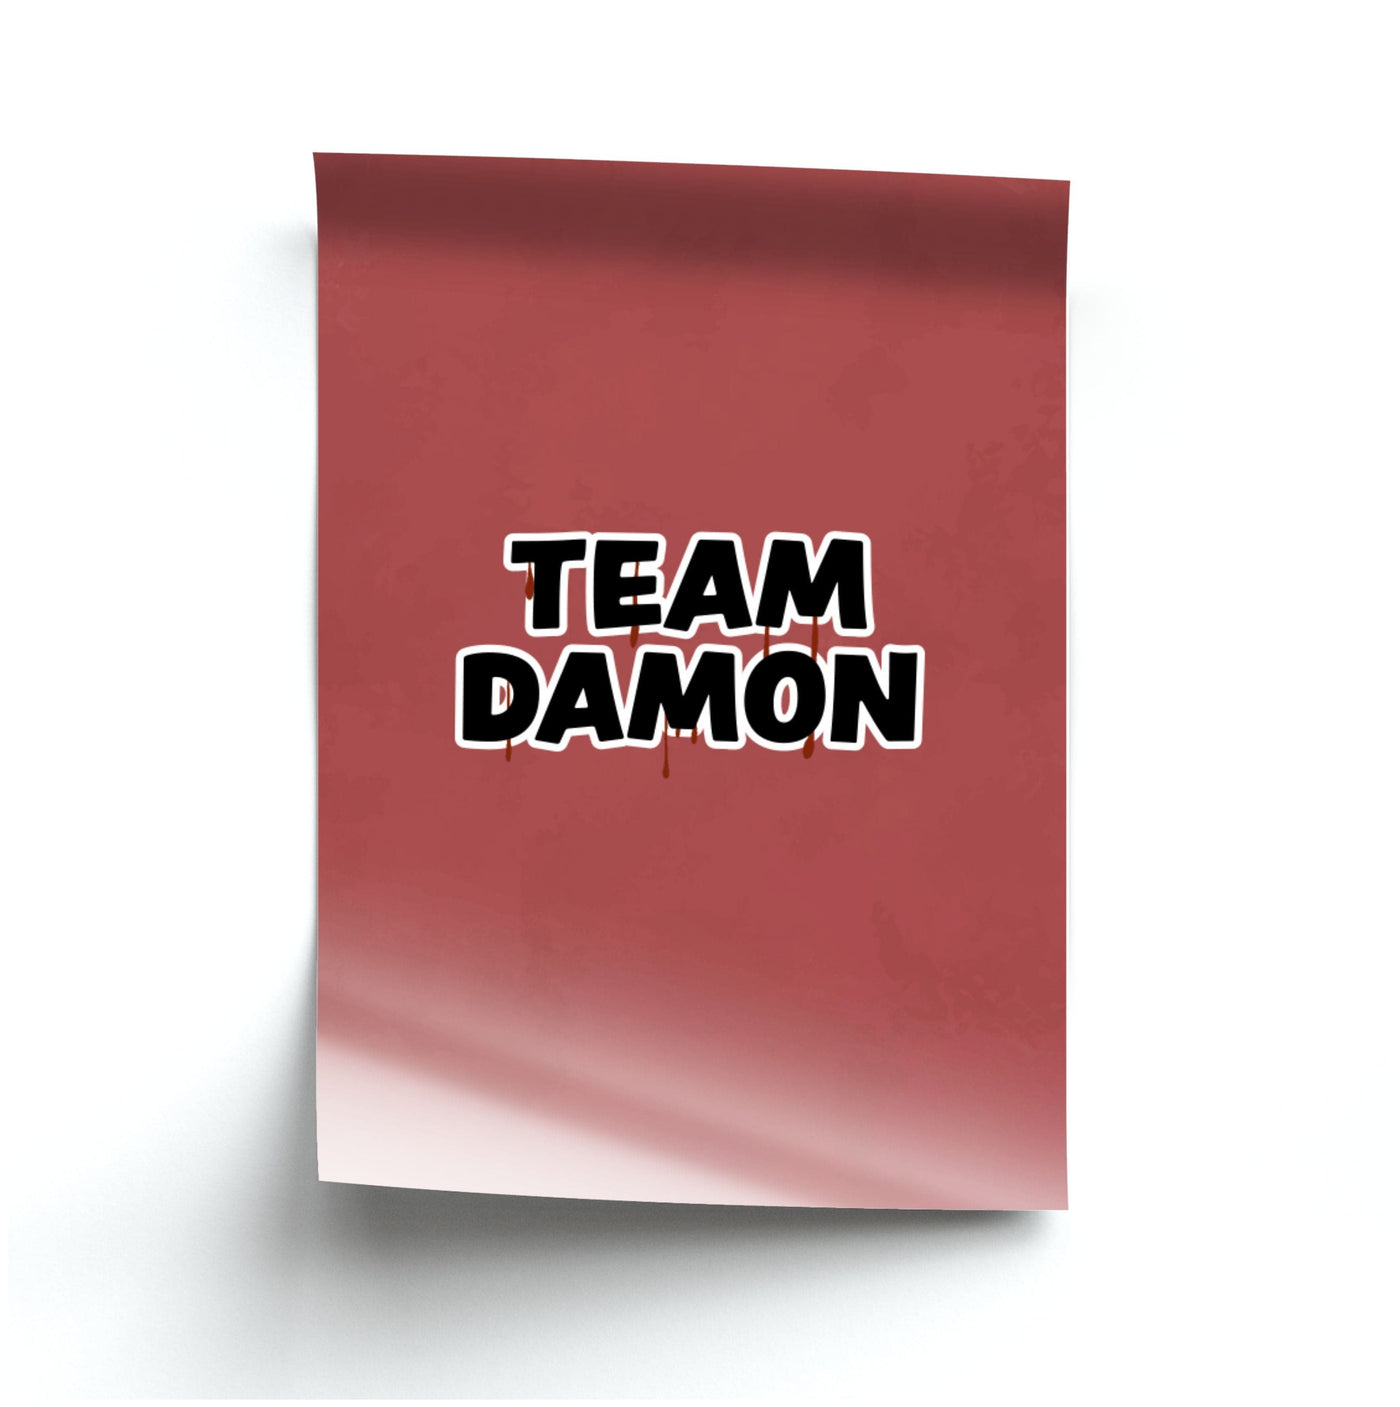 Team Damon - Vampire Diaries Poster